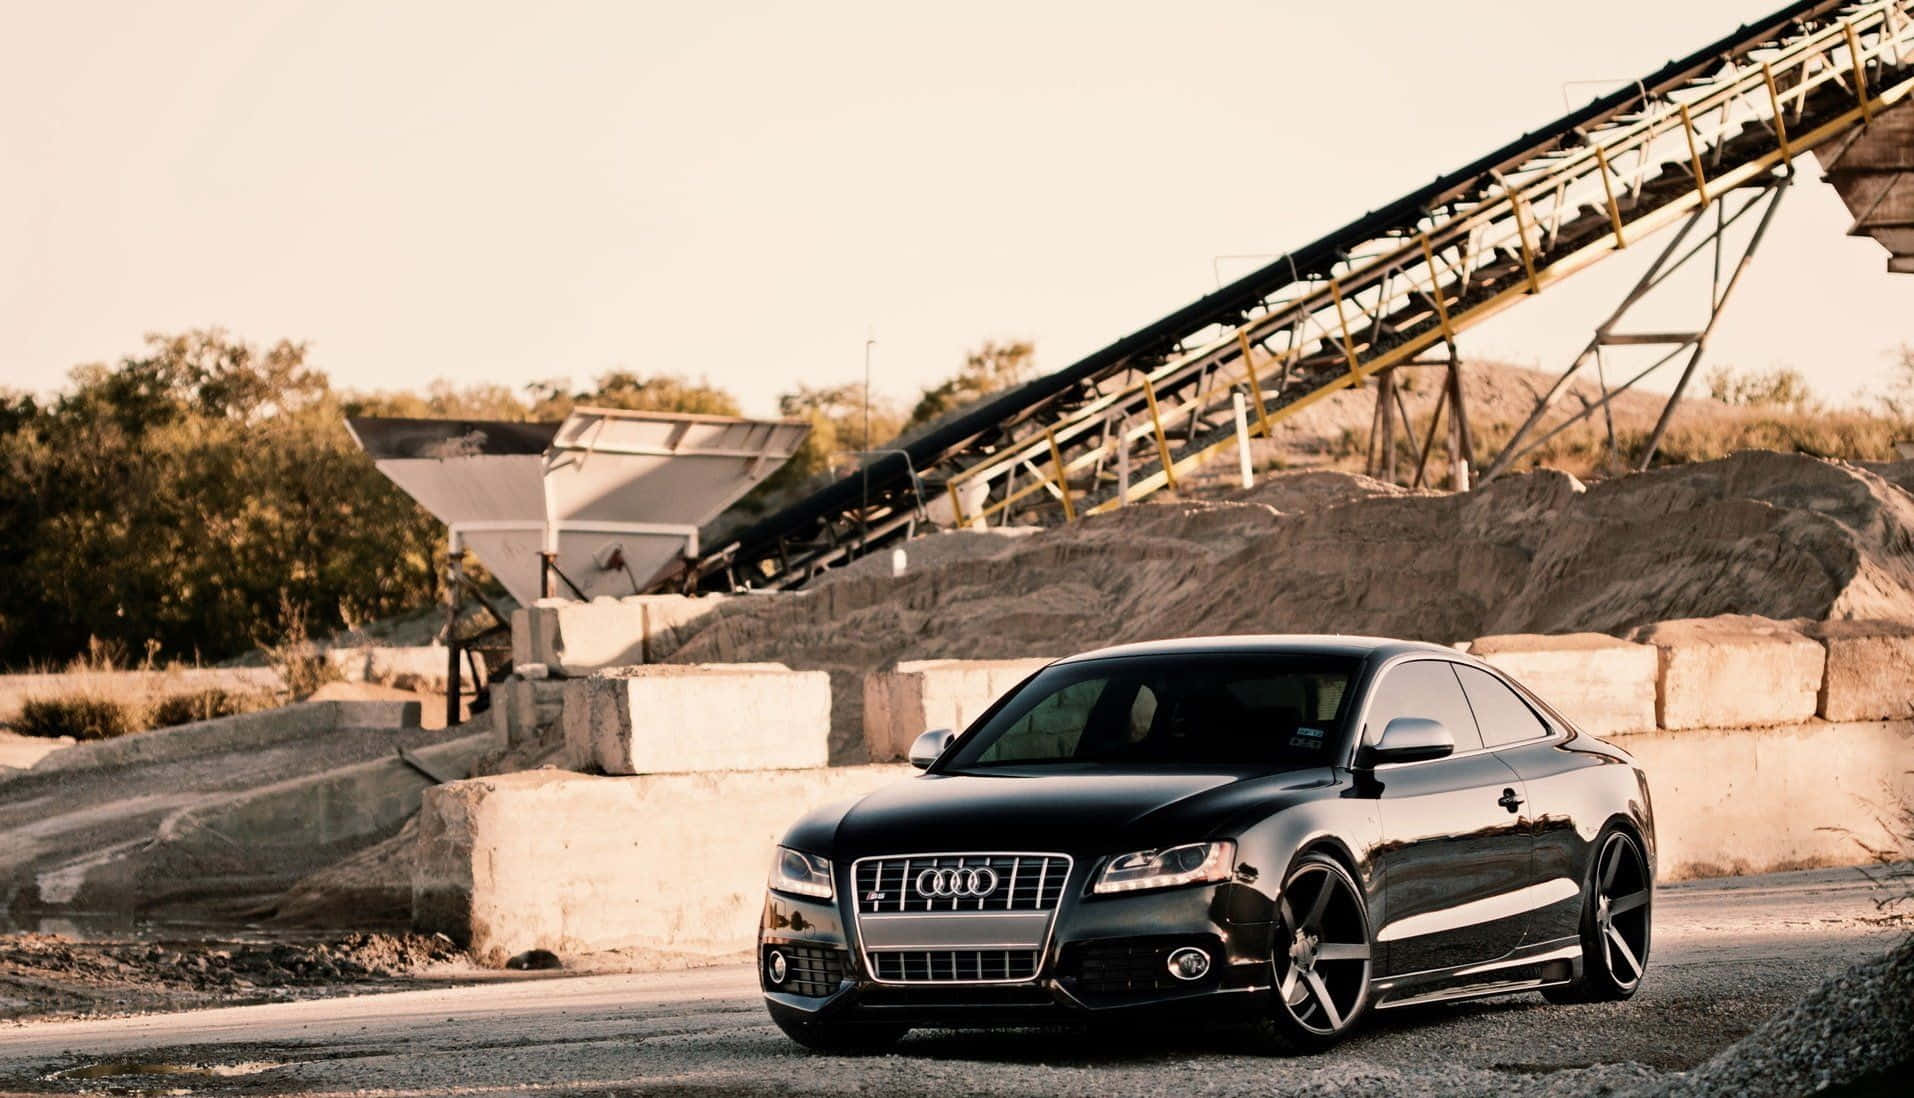 Caption: Sleek Audi S6 Sport Sedan on Urban Road Wallpaper